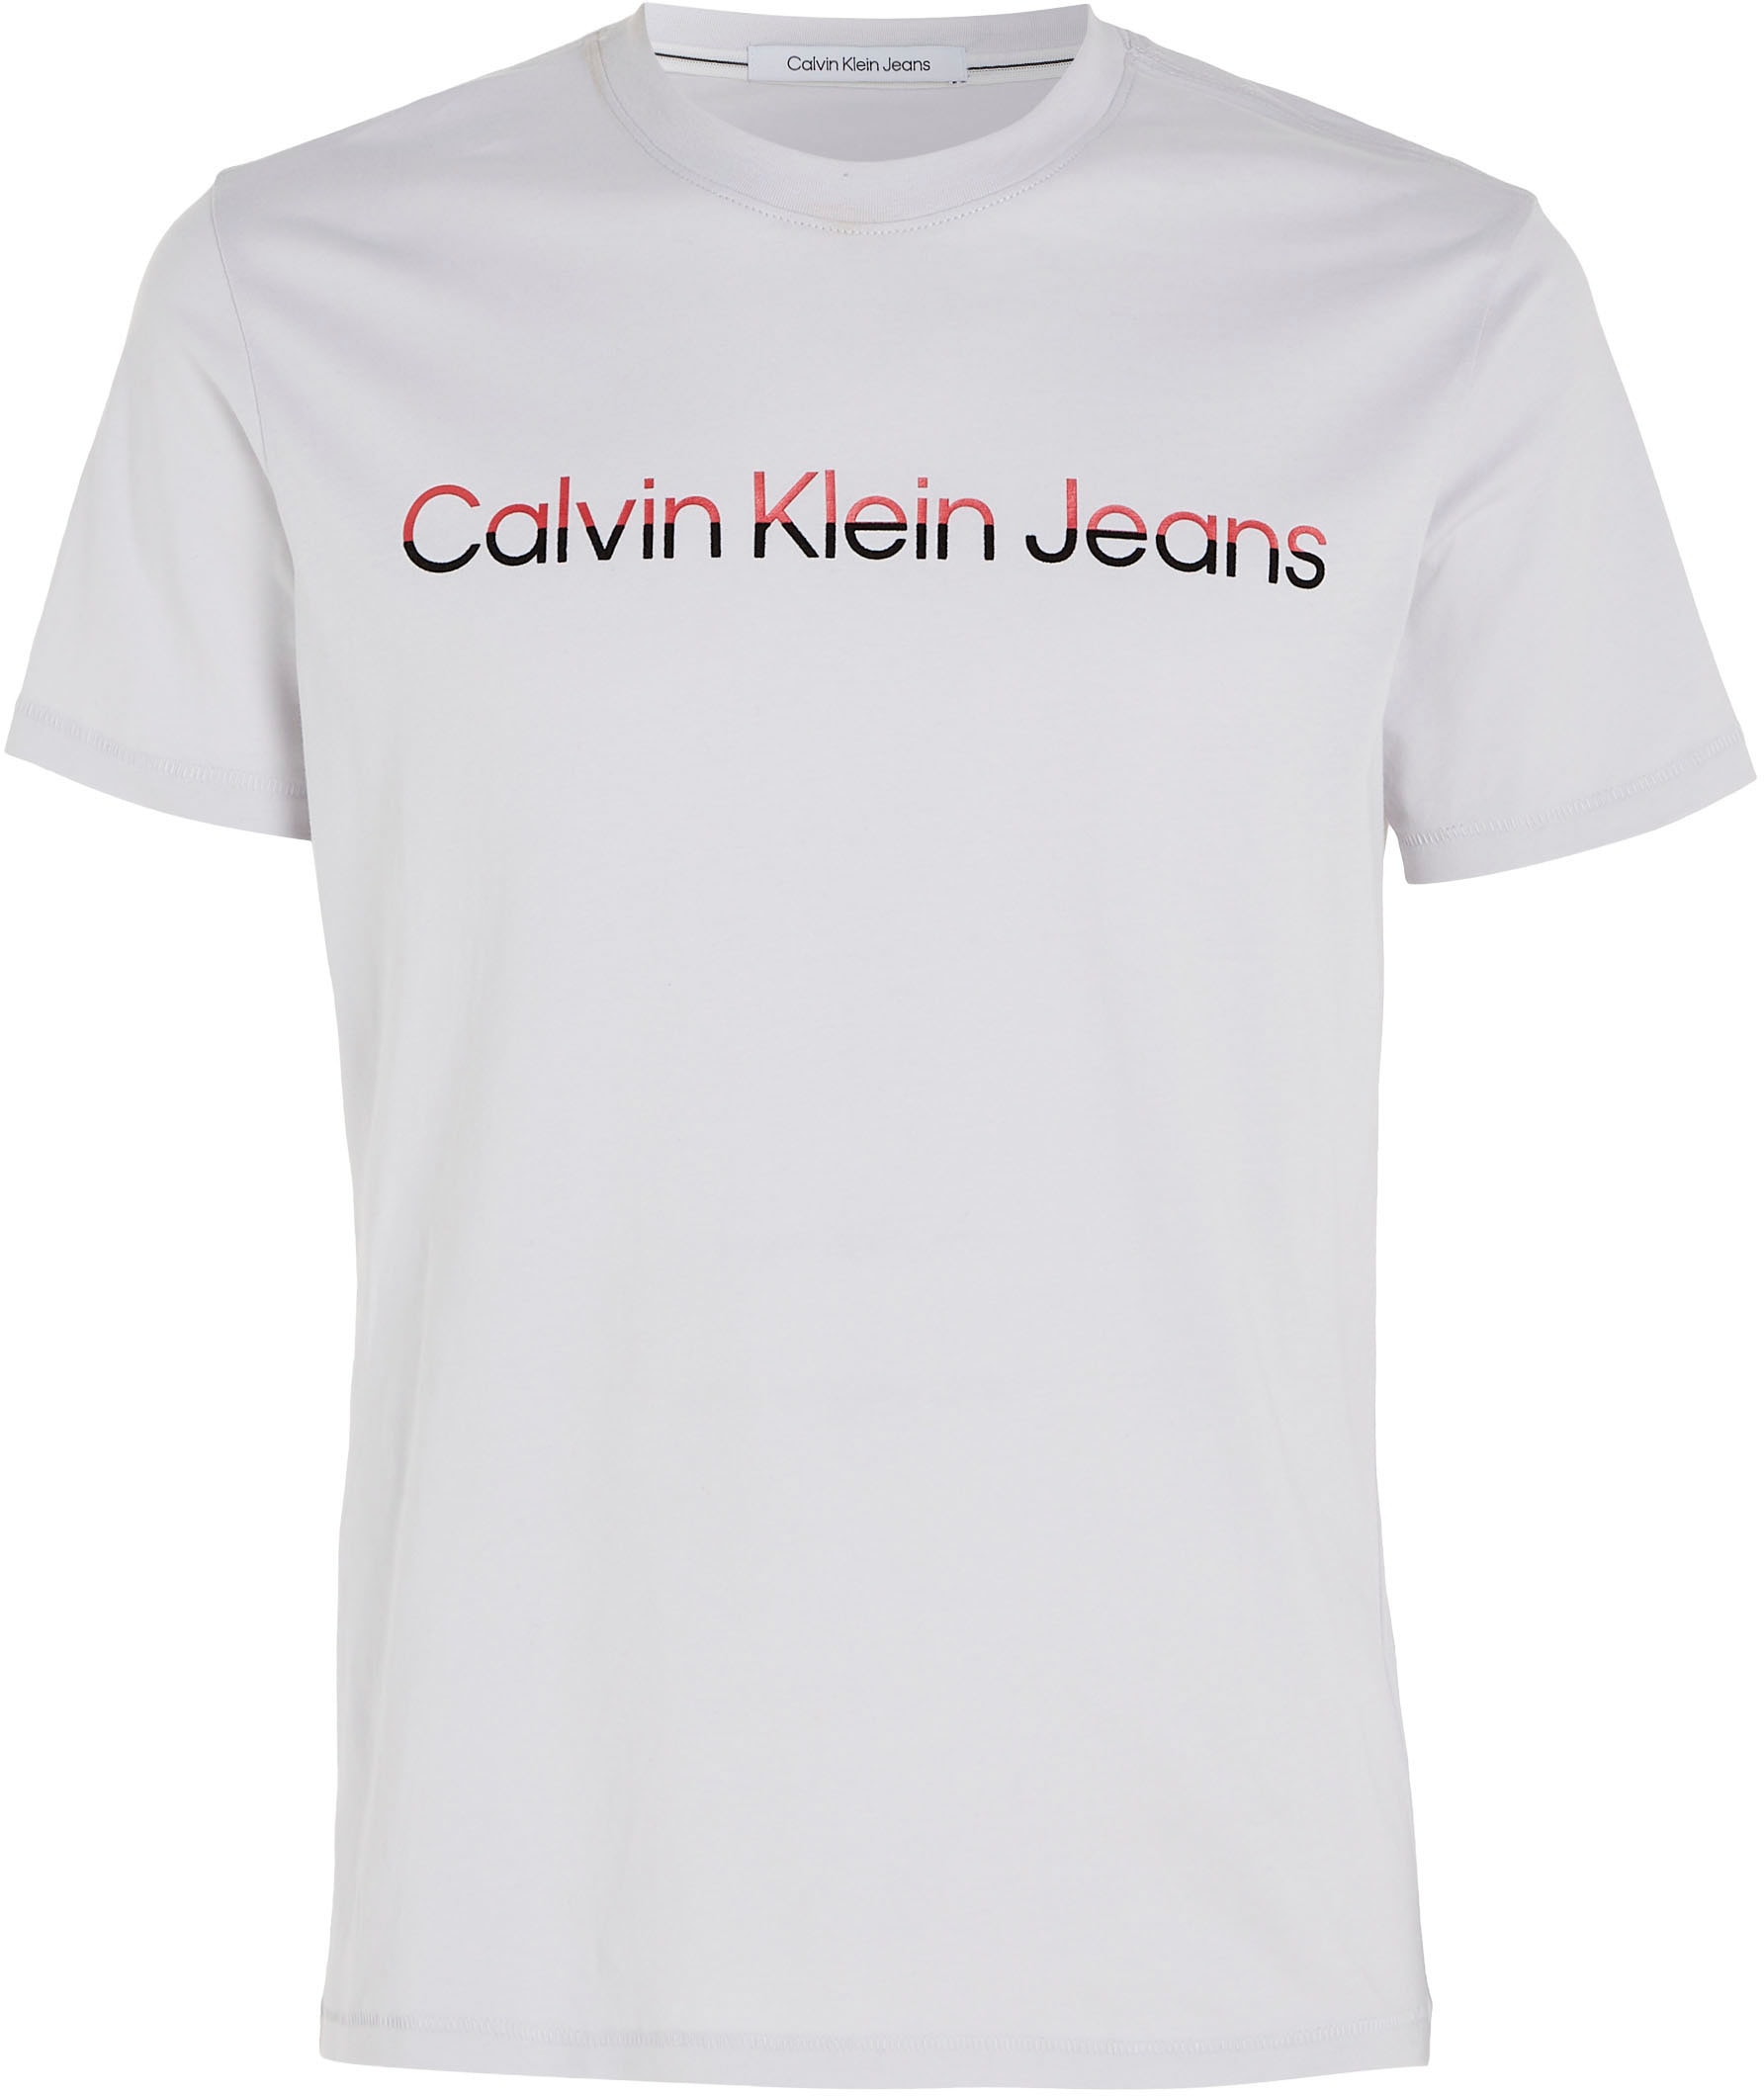 Calvin Klein Jeans Calvin KLEIN Džinsai Marškinėliai »Shi...